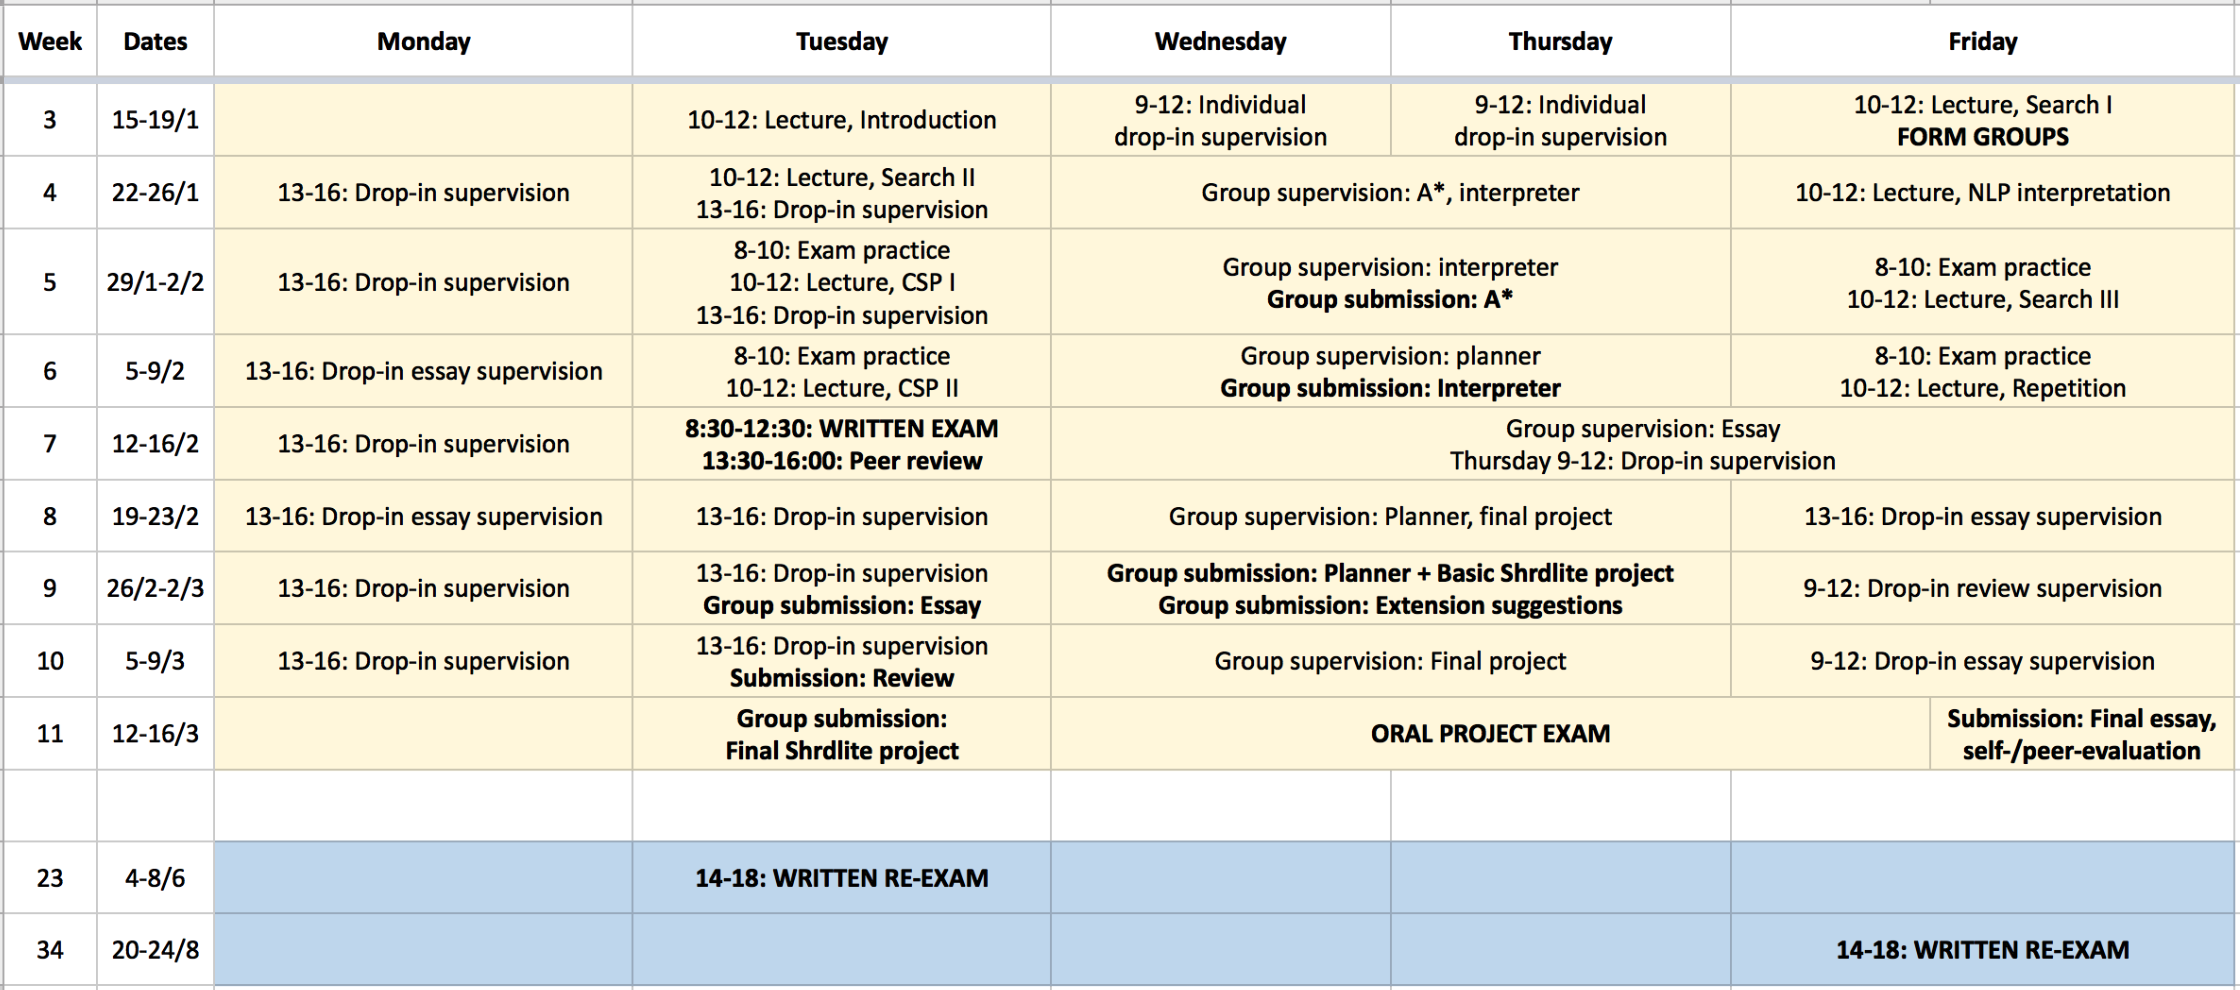 Overview schedule